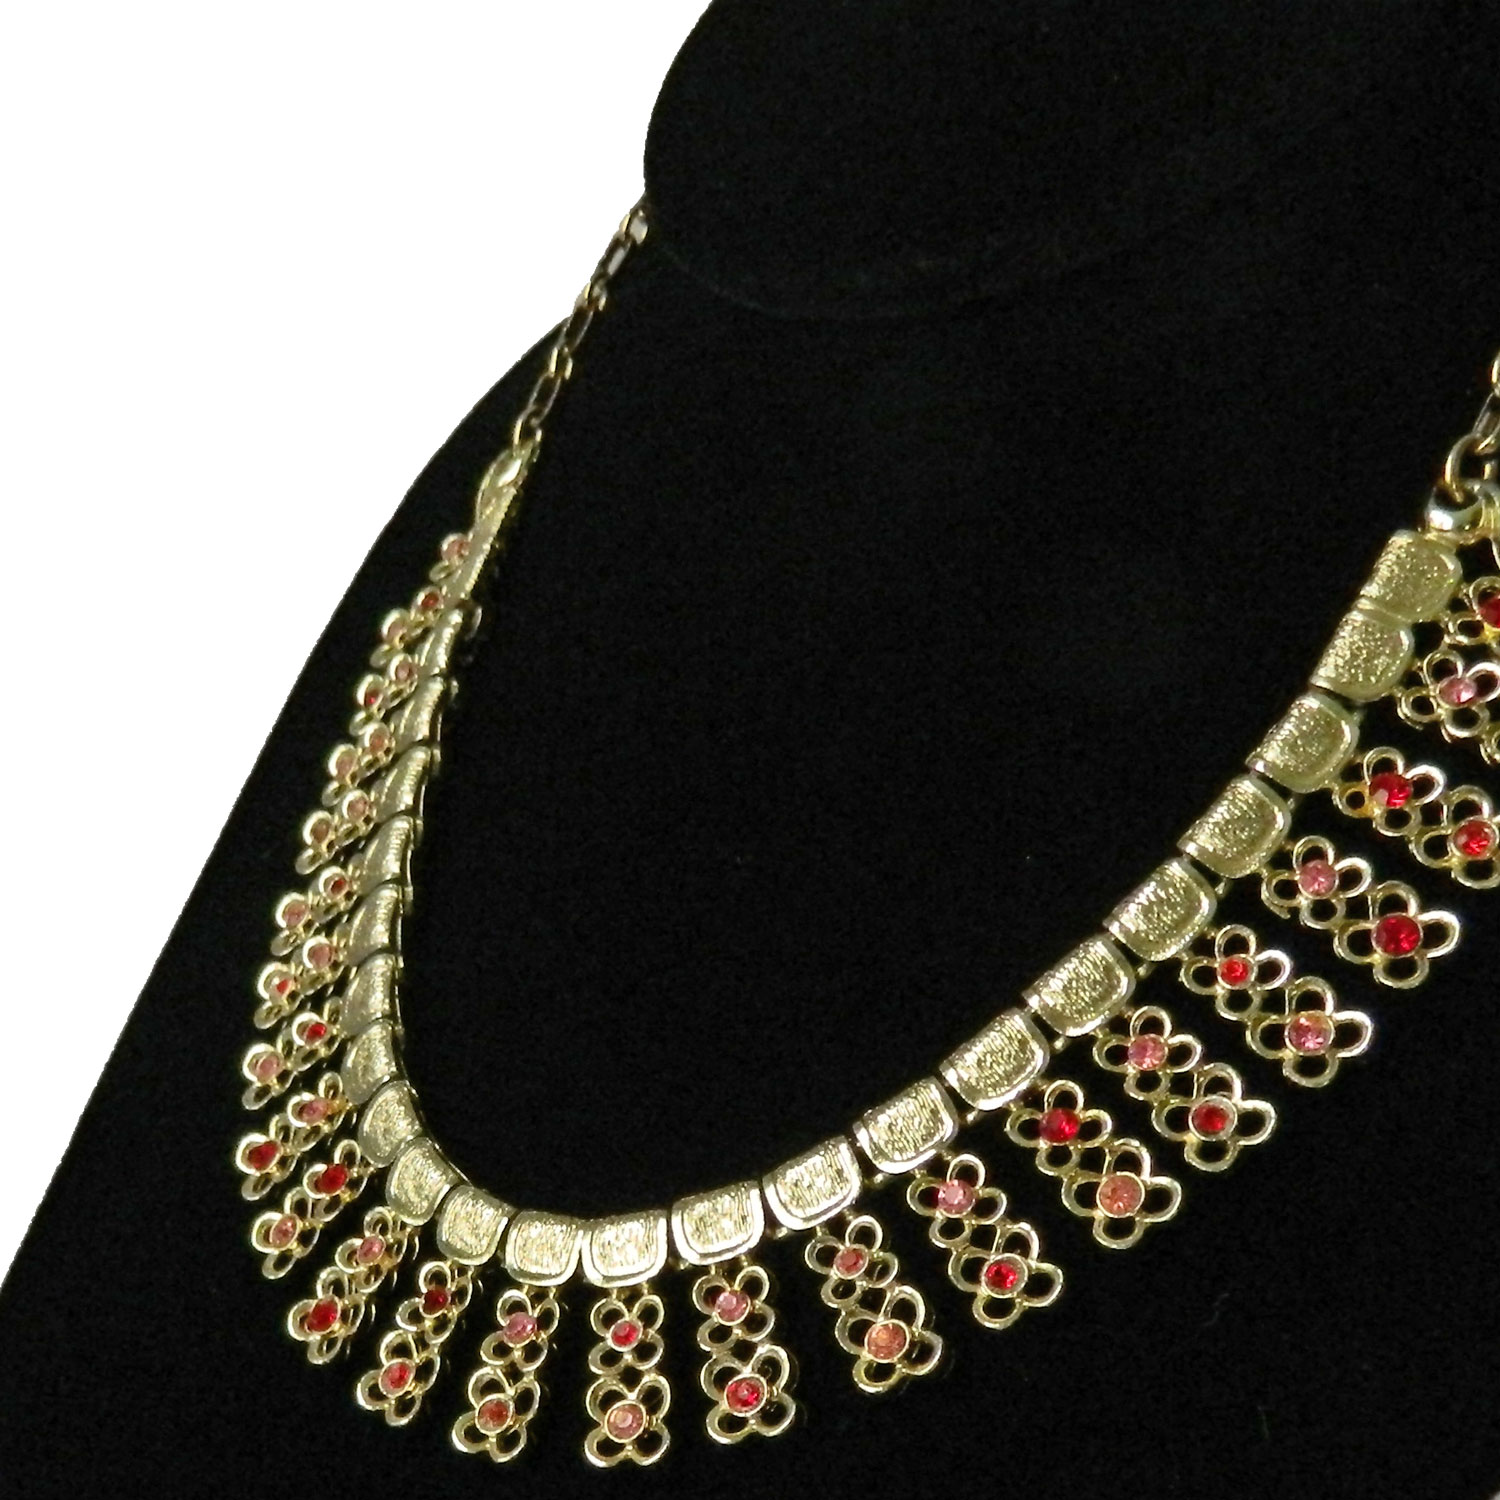 1950s pink rhinestone necklace